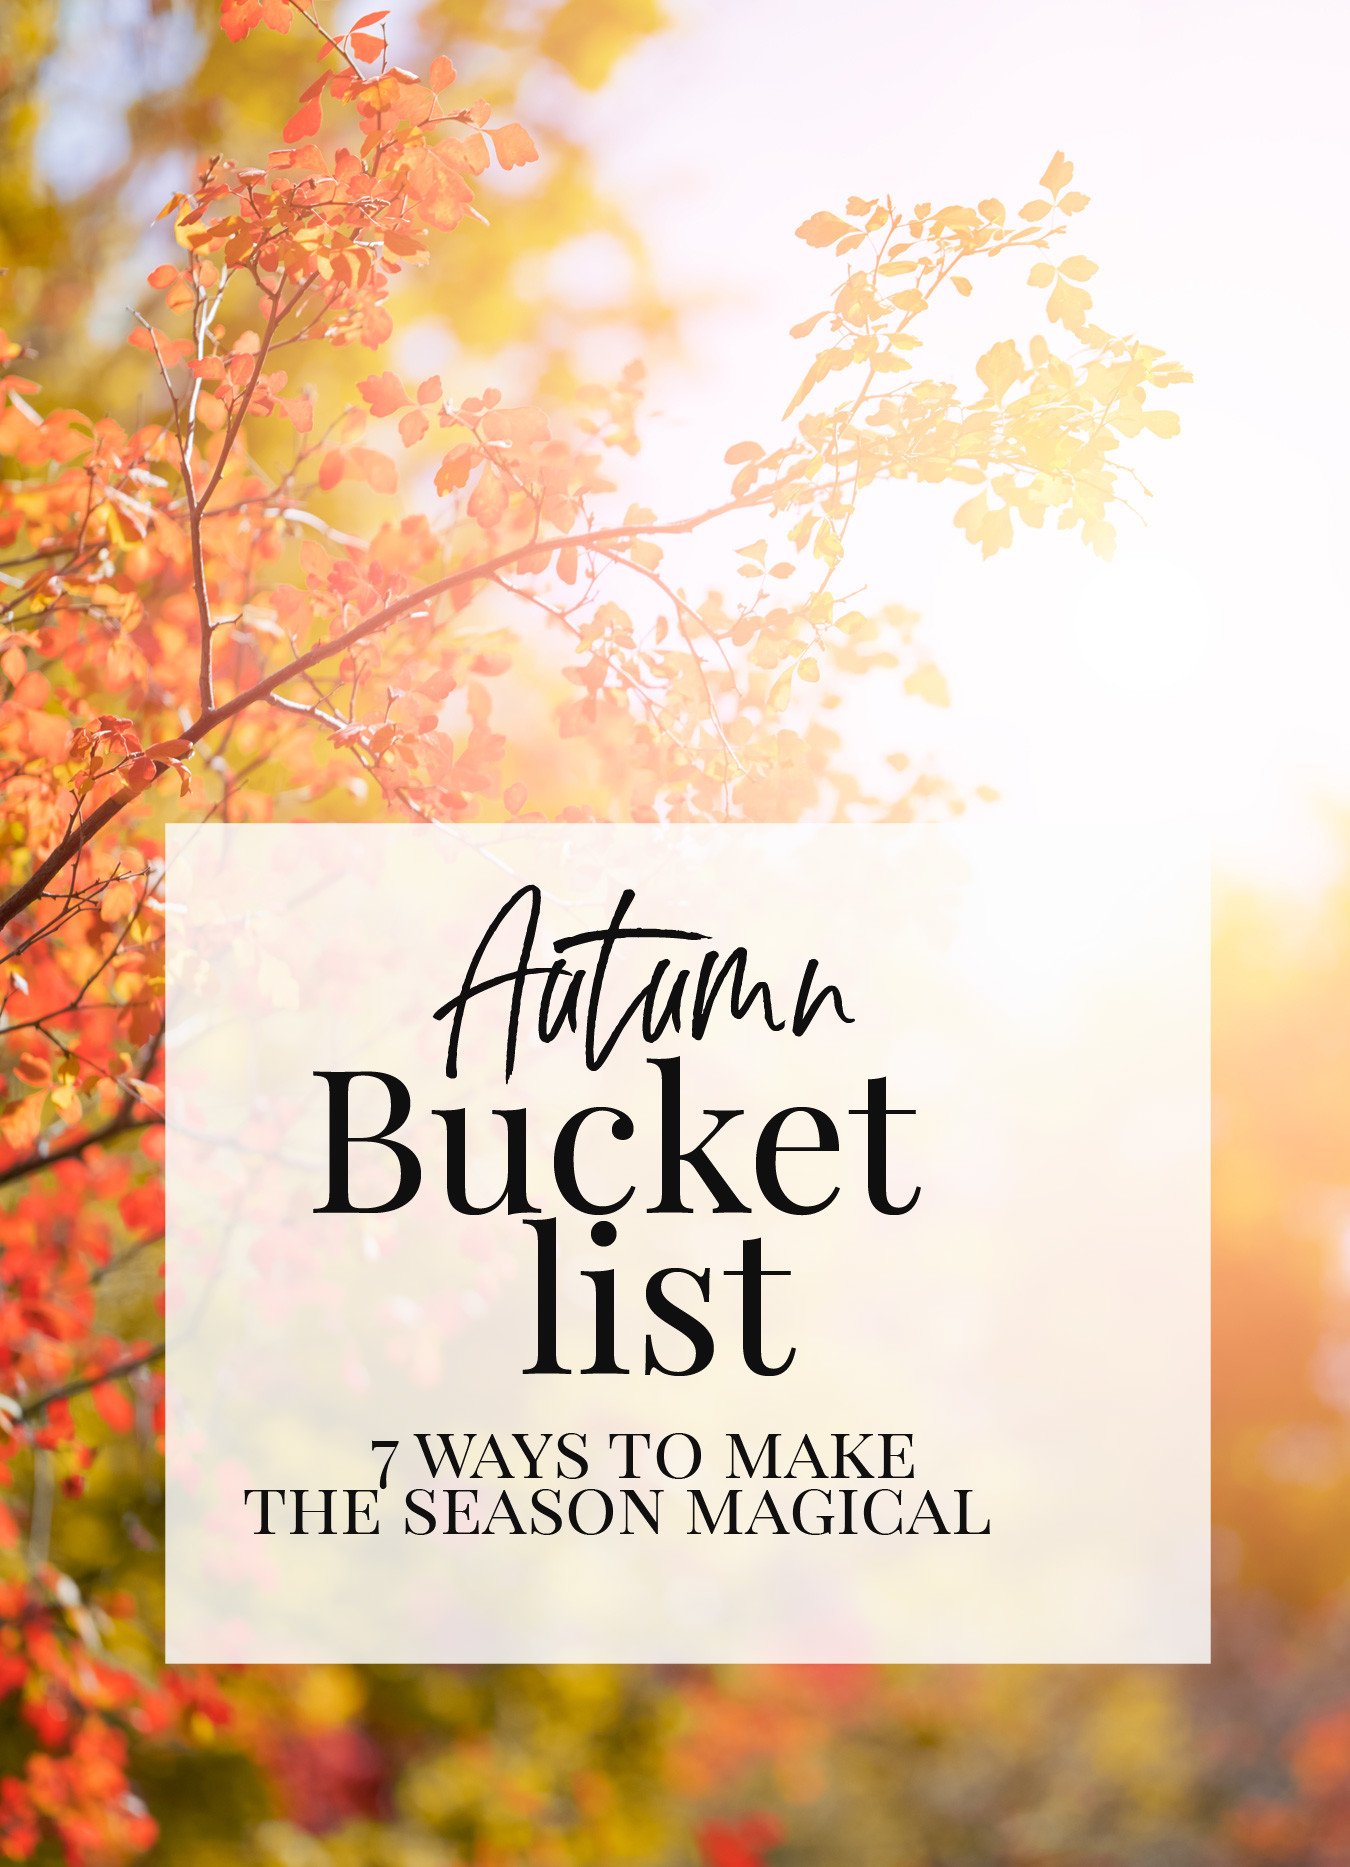 Autumn bucket list: 7 ways to make the season magical